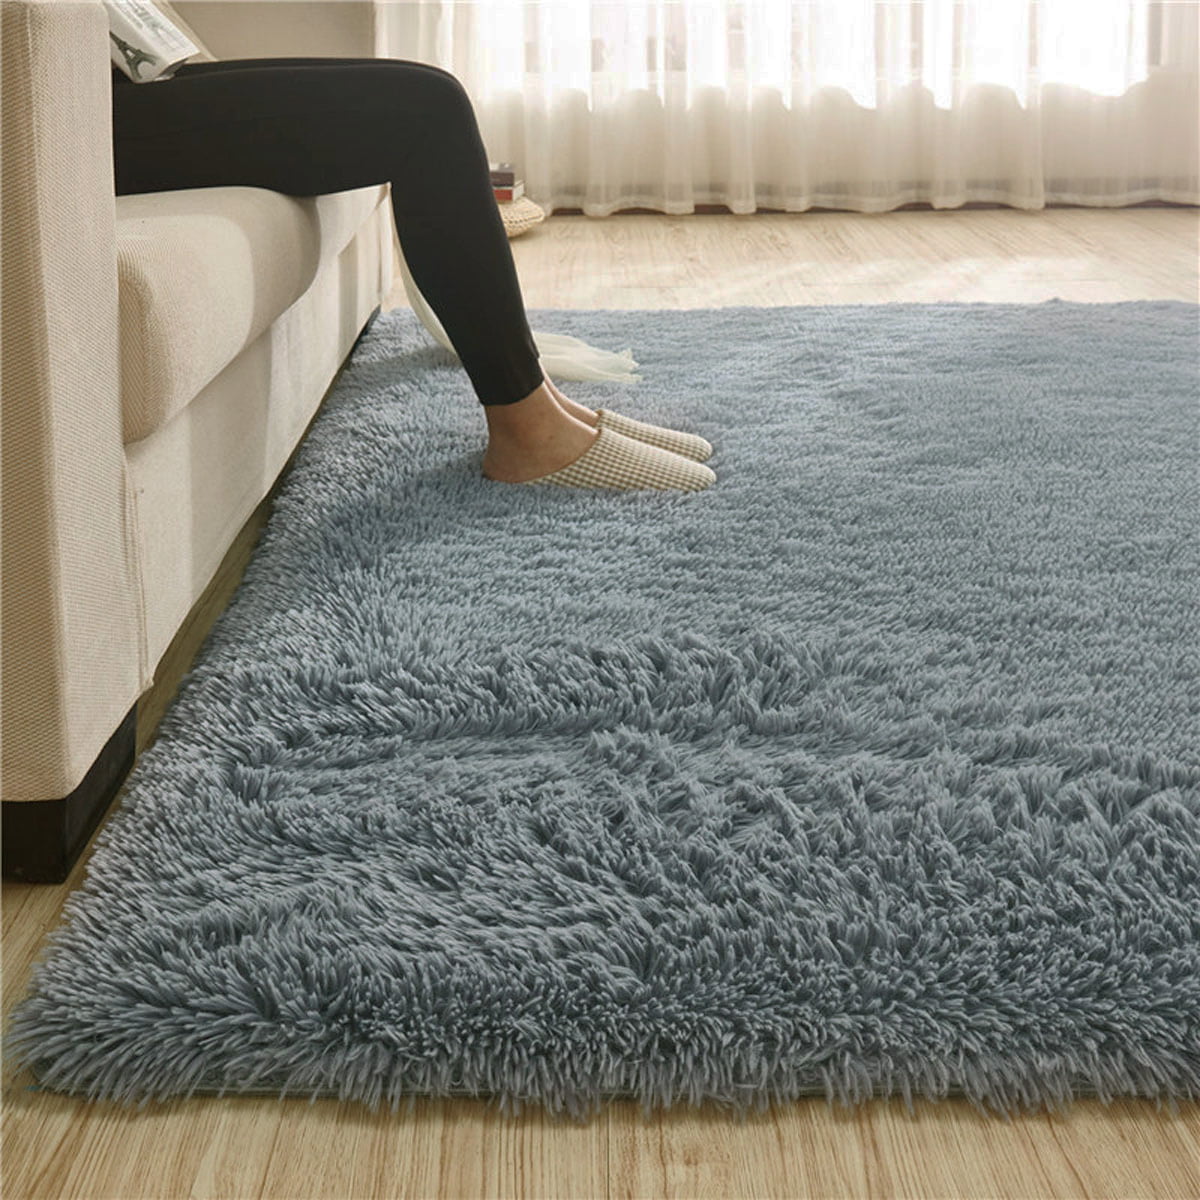 Shaggy Fluffy Rugs Carpet Nonslip Area Rug Dining Room Home Bathroom Floor GW 